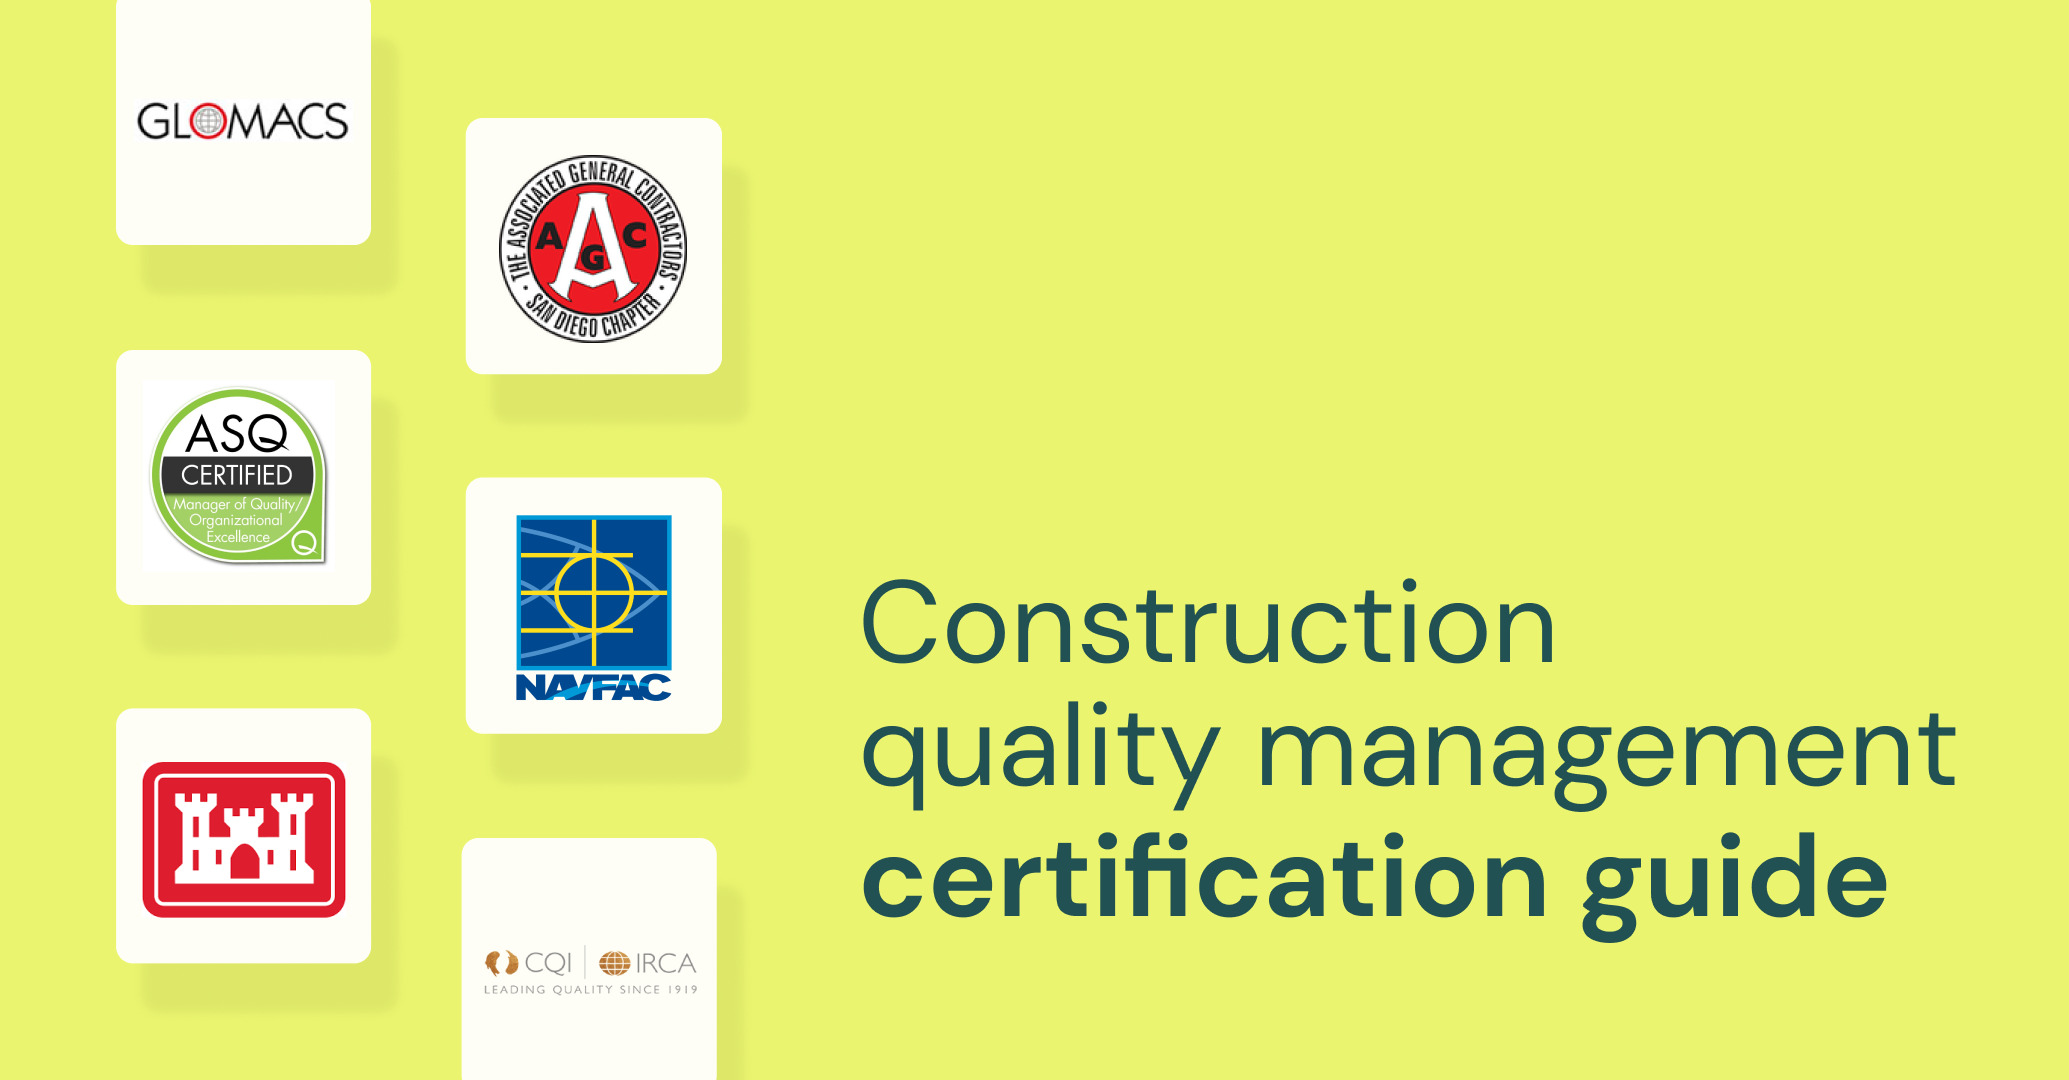 Construction quality company logos